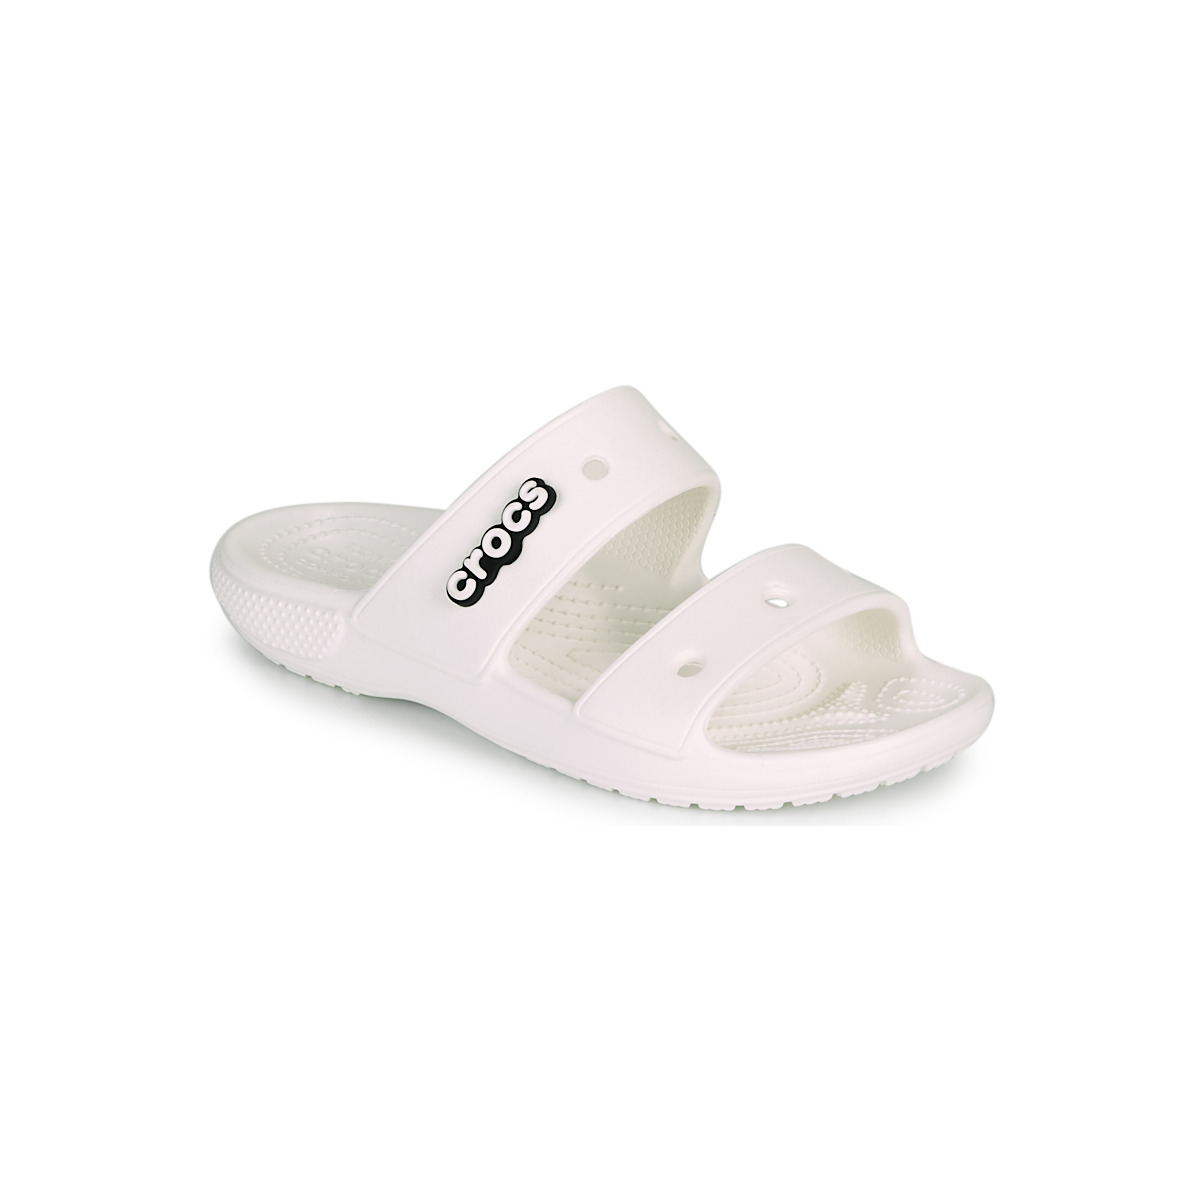 kengät Sandaalit Crocs CLASSIC CROCS SANDAL Valkoinen